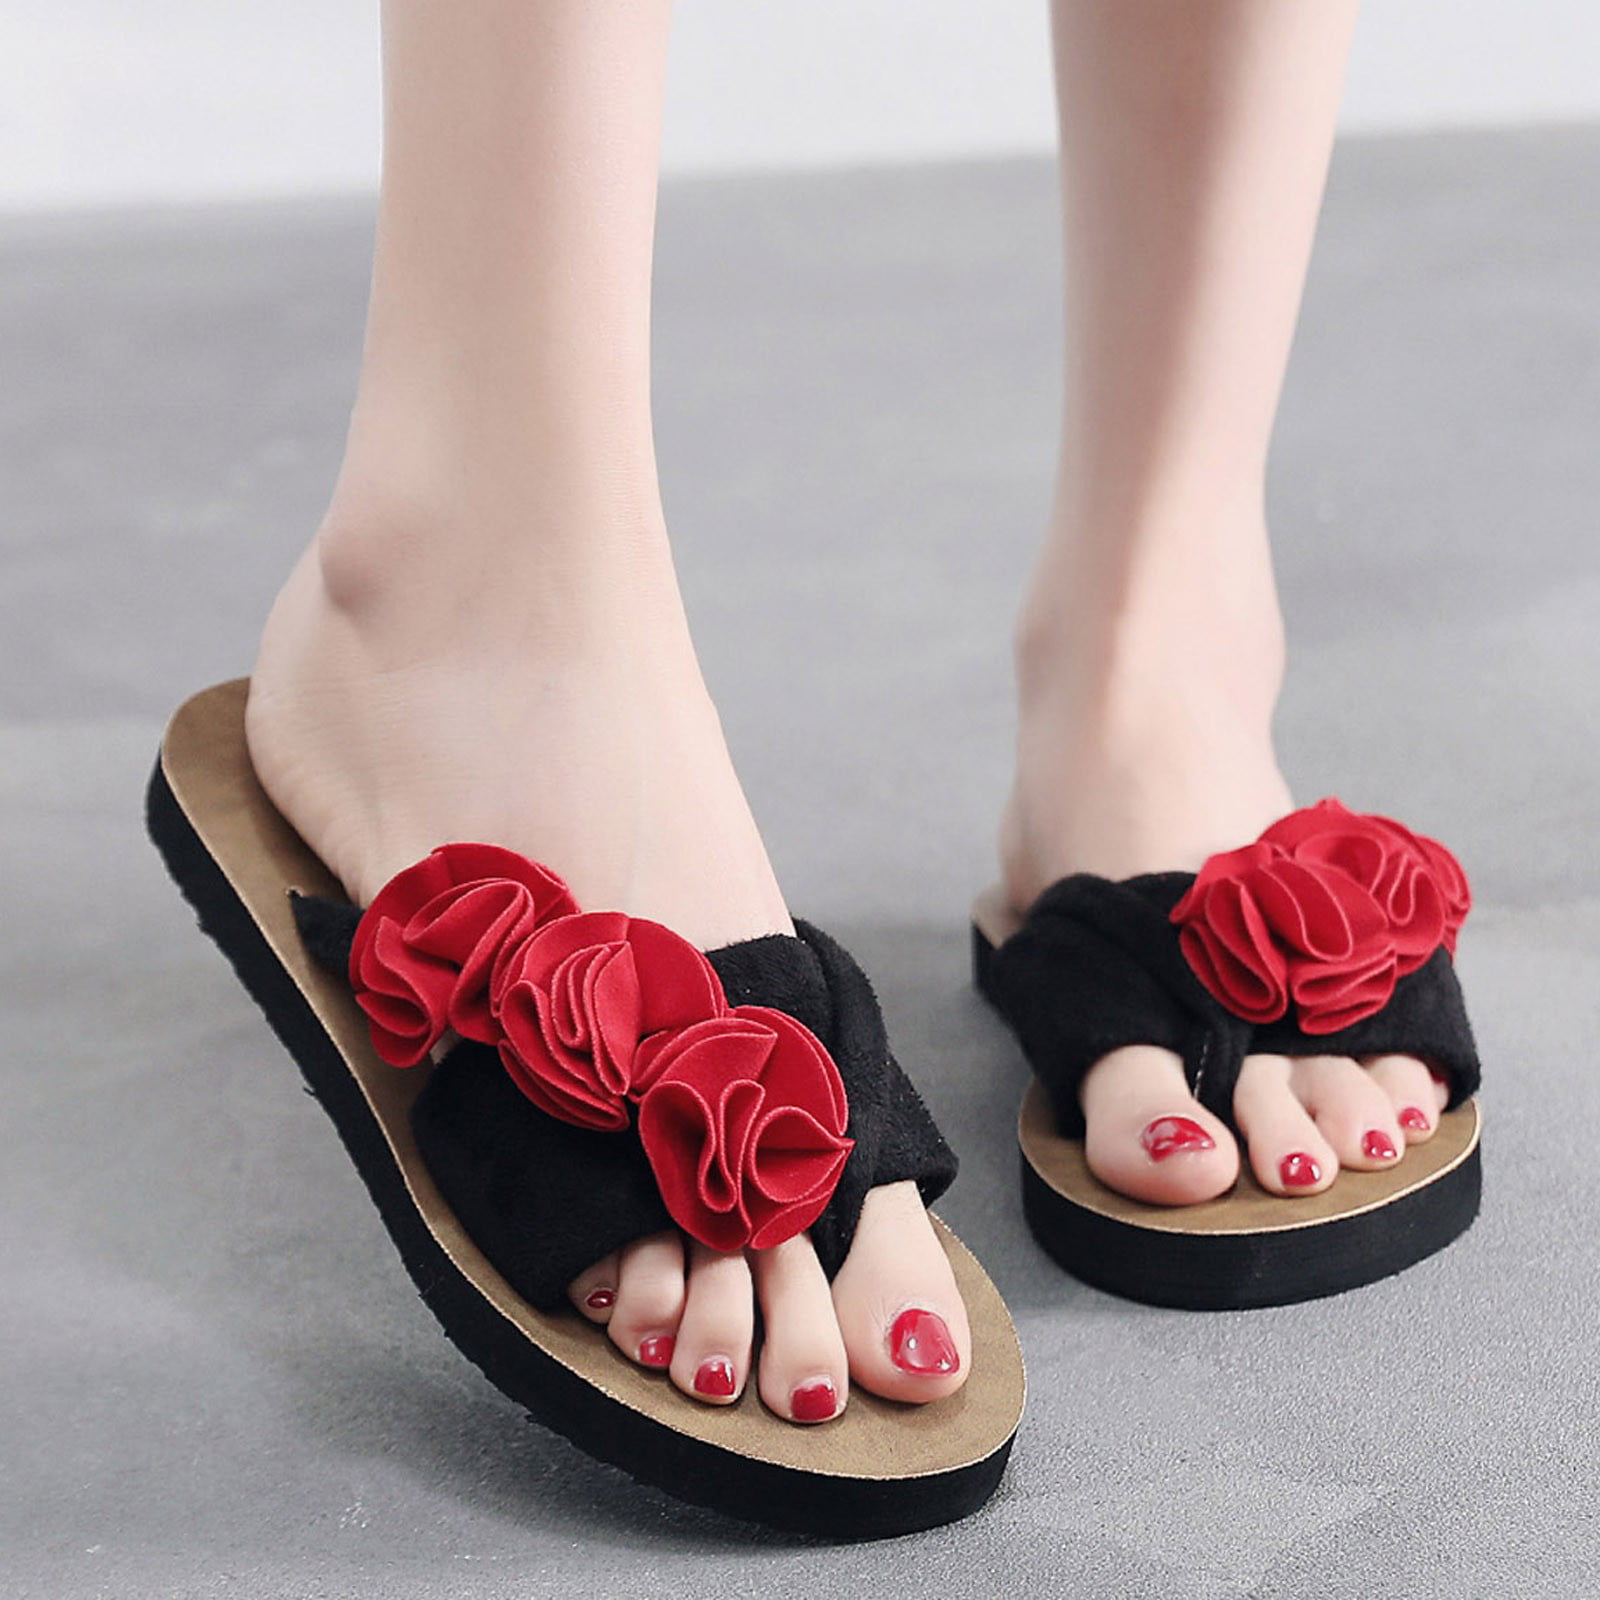 New Sandals Women Slippers Flat Slides Ladies Summer Beach Shoes Woman flip Flops,Red,10 